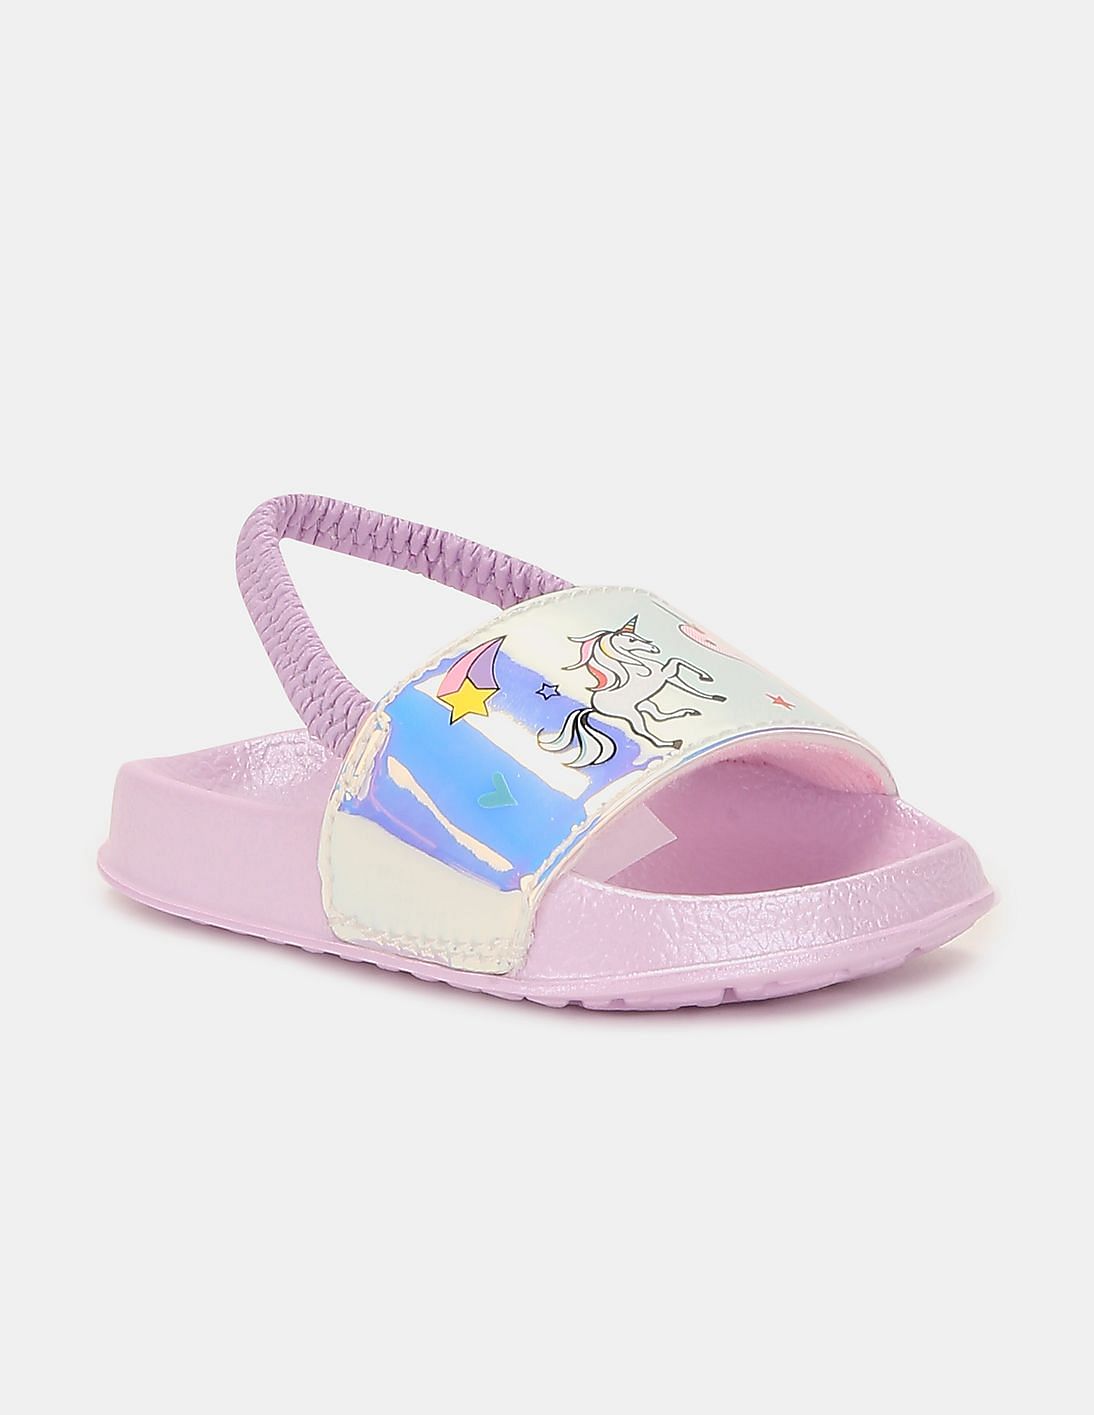 children's place unicorn slippers